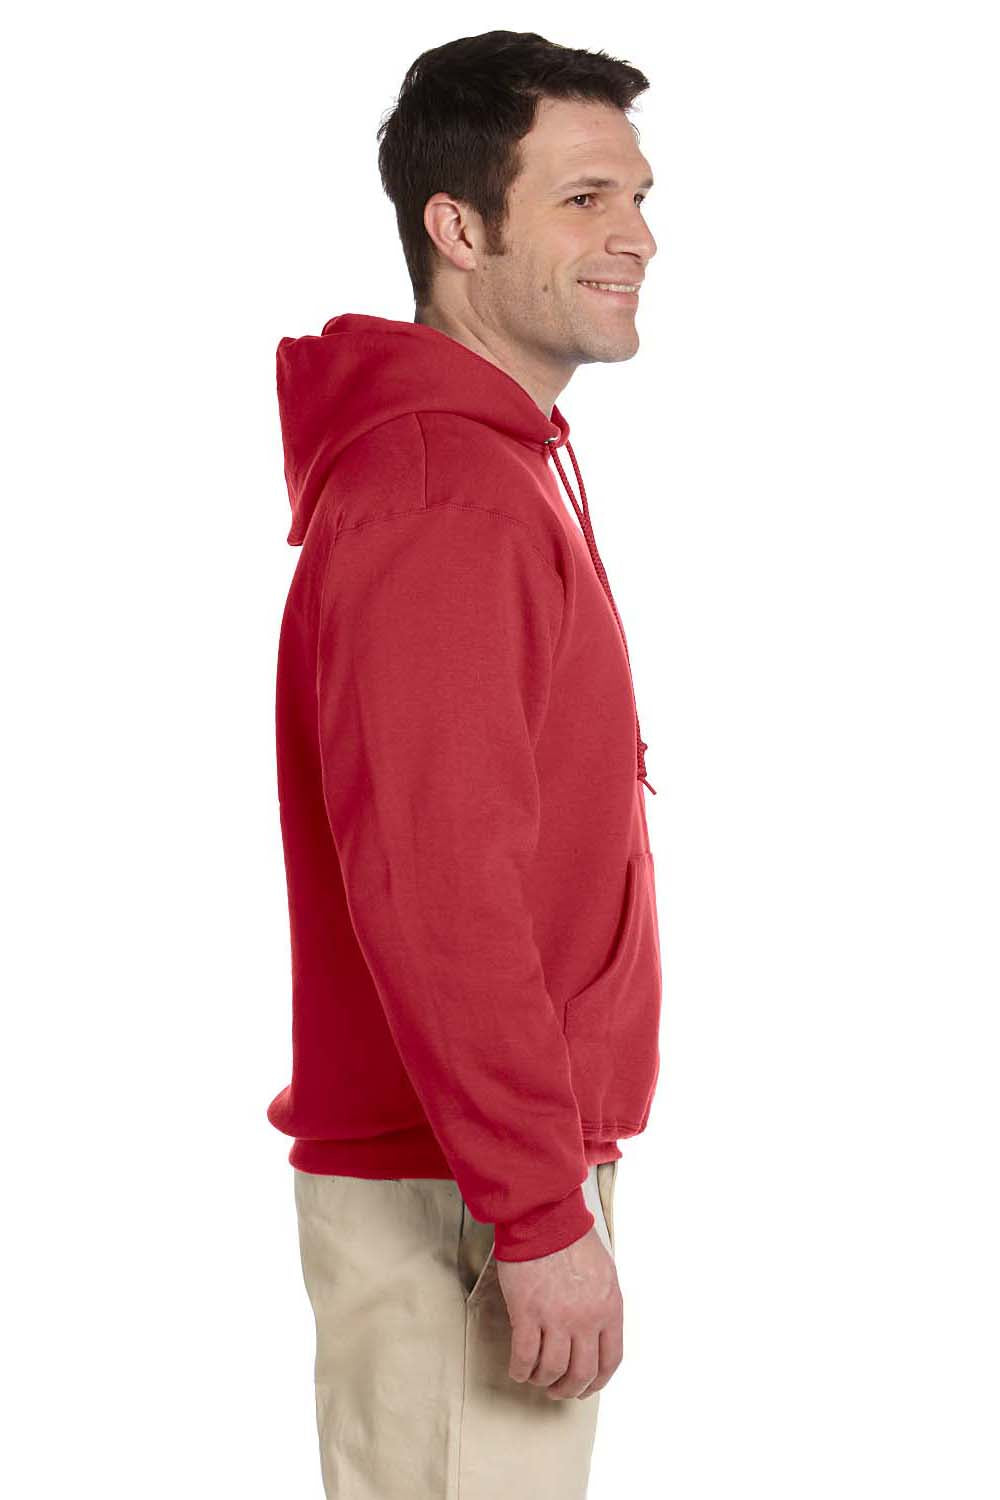 Jerzees 4997 Mens Super Sweats NuBlend Fleece Hooded Sweatshirt Hoodie Red Side